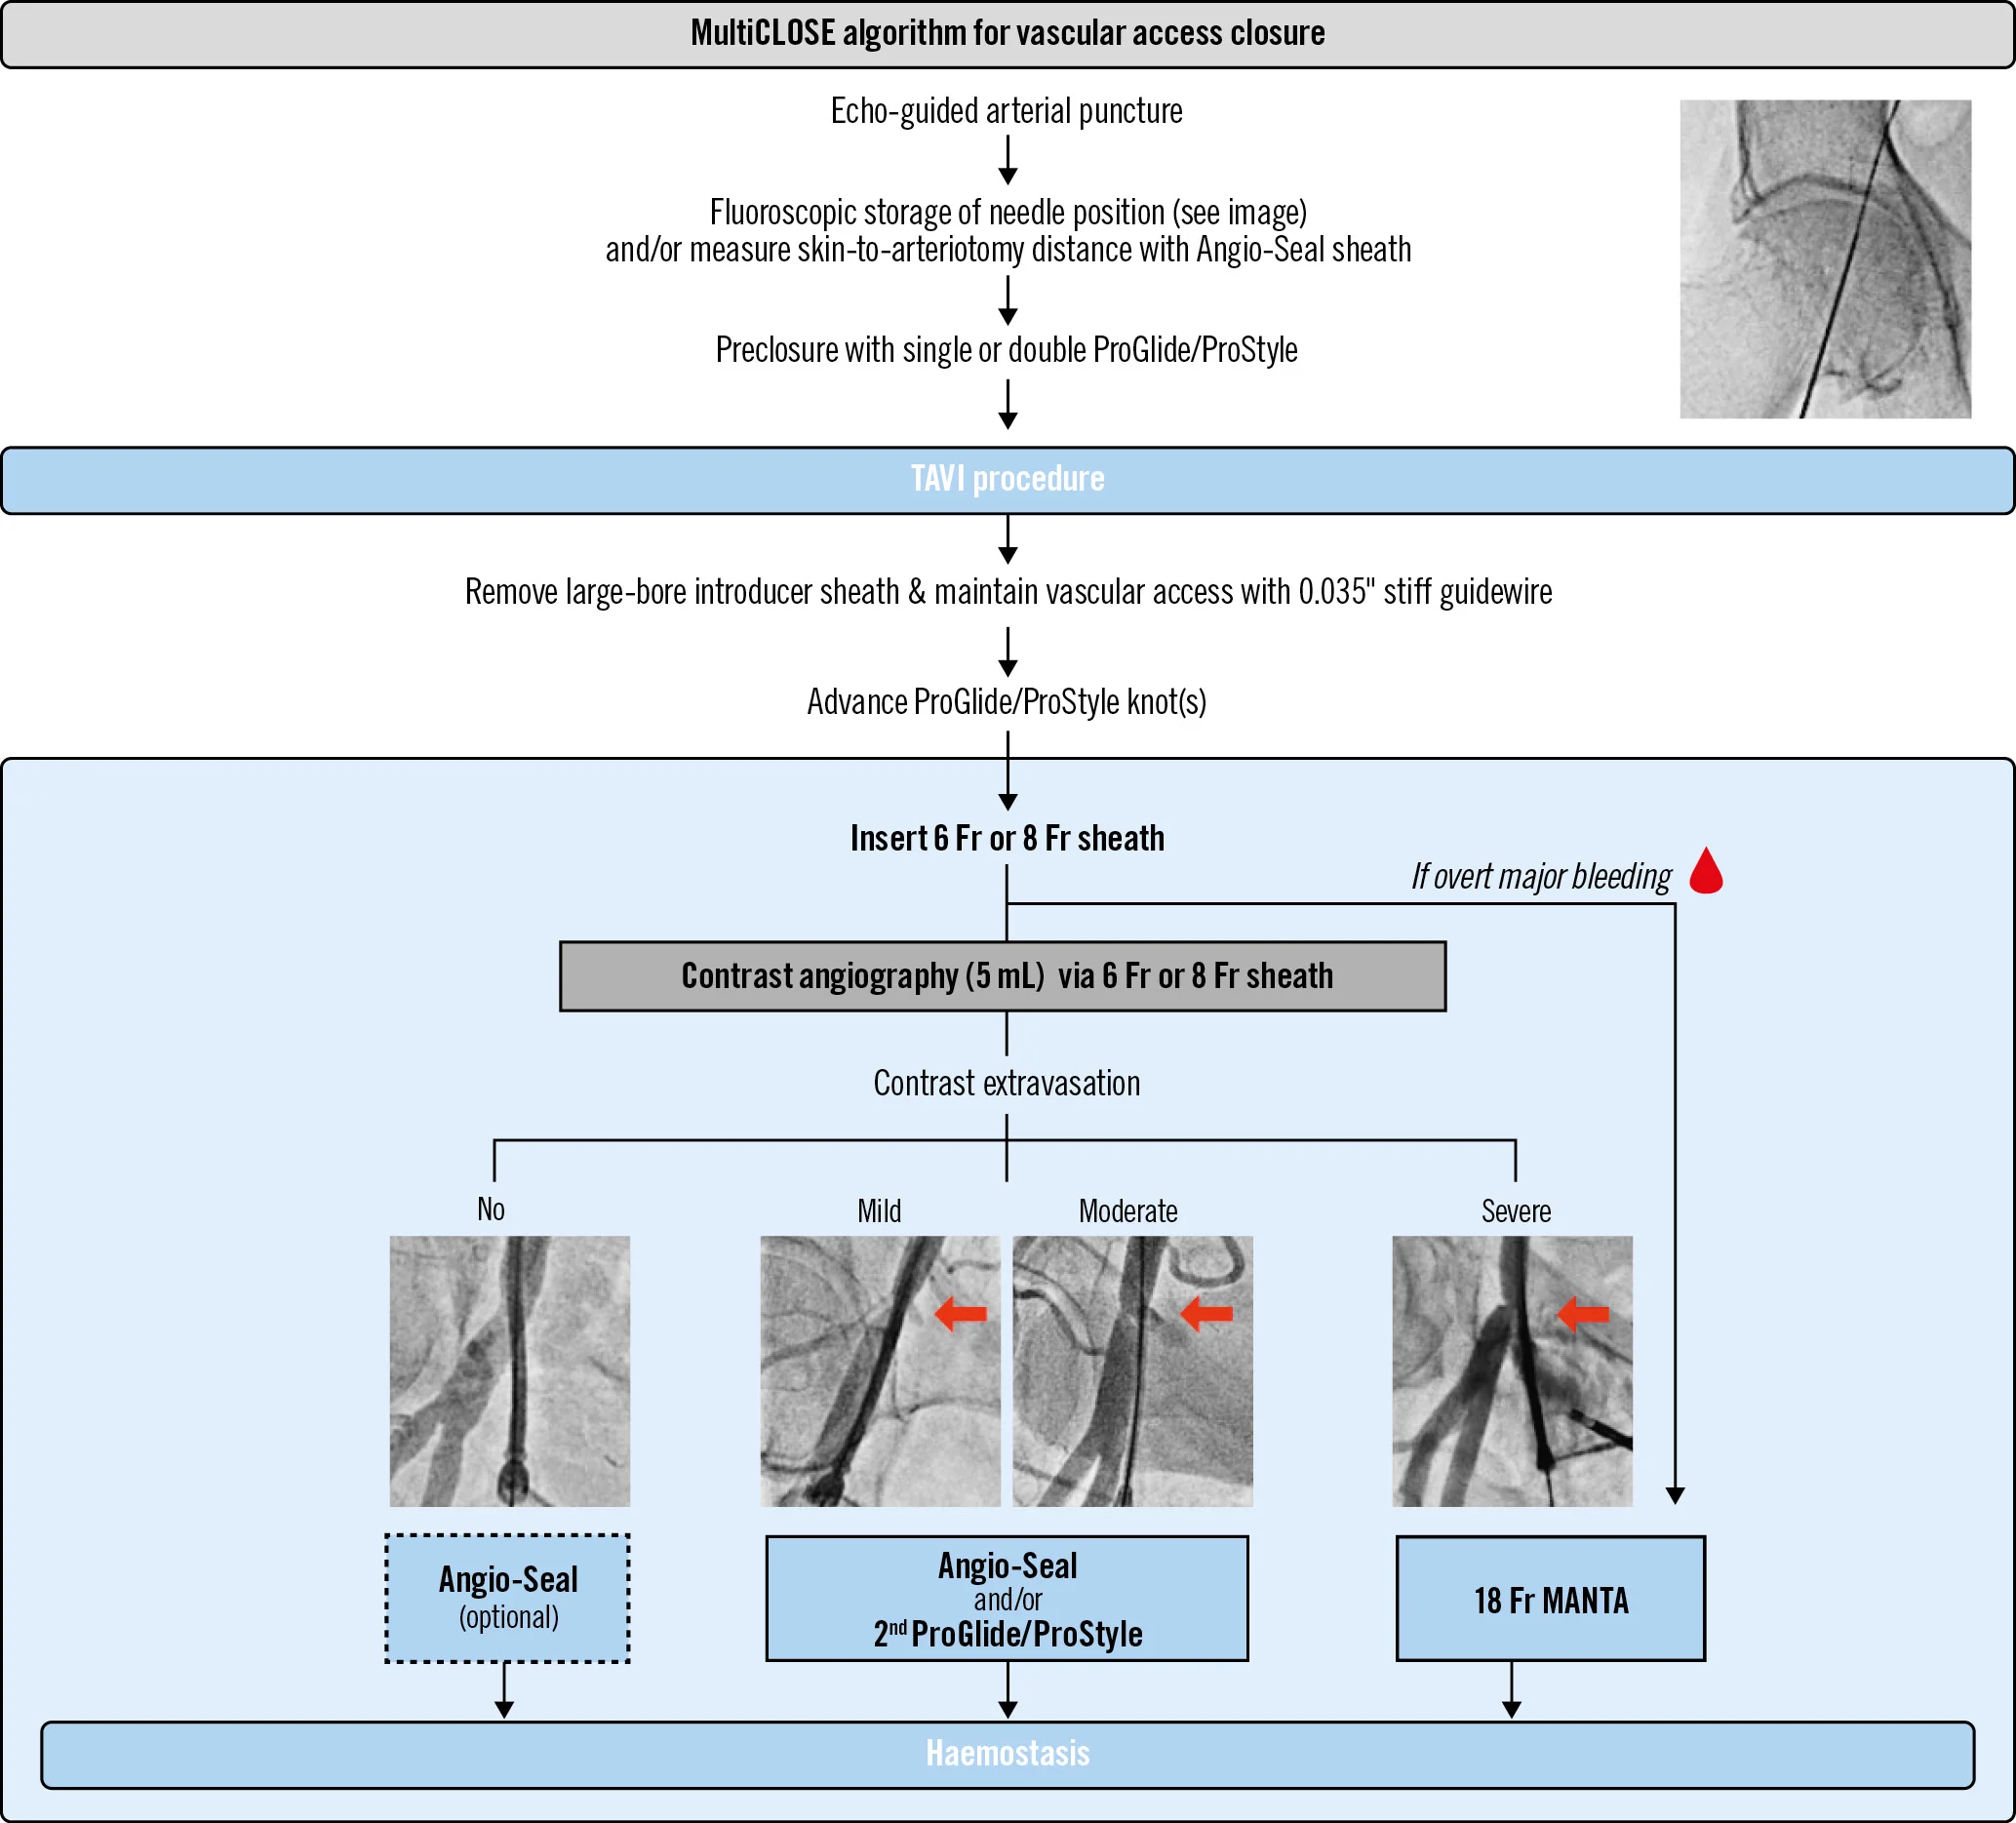 Vascular closure algorithm for TF-TAVI